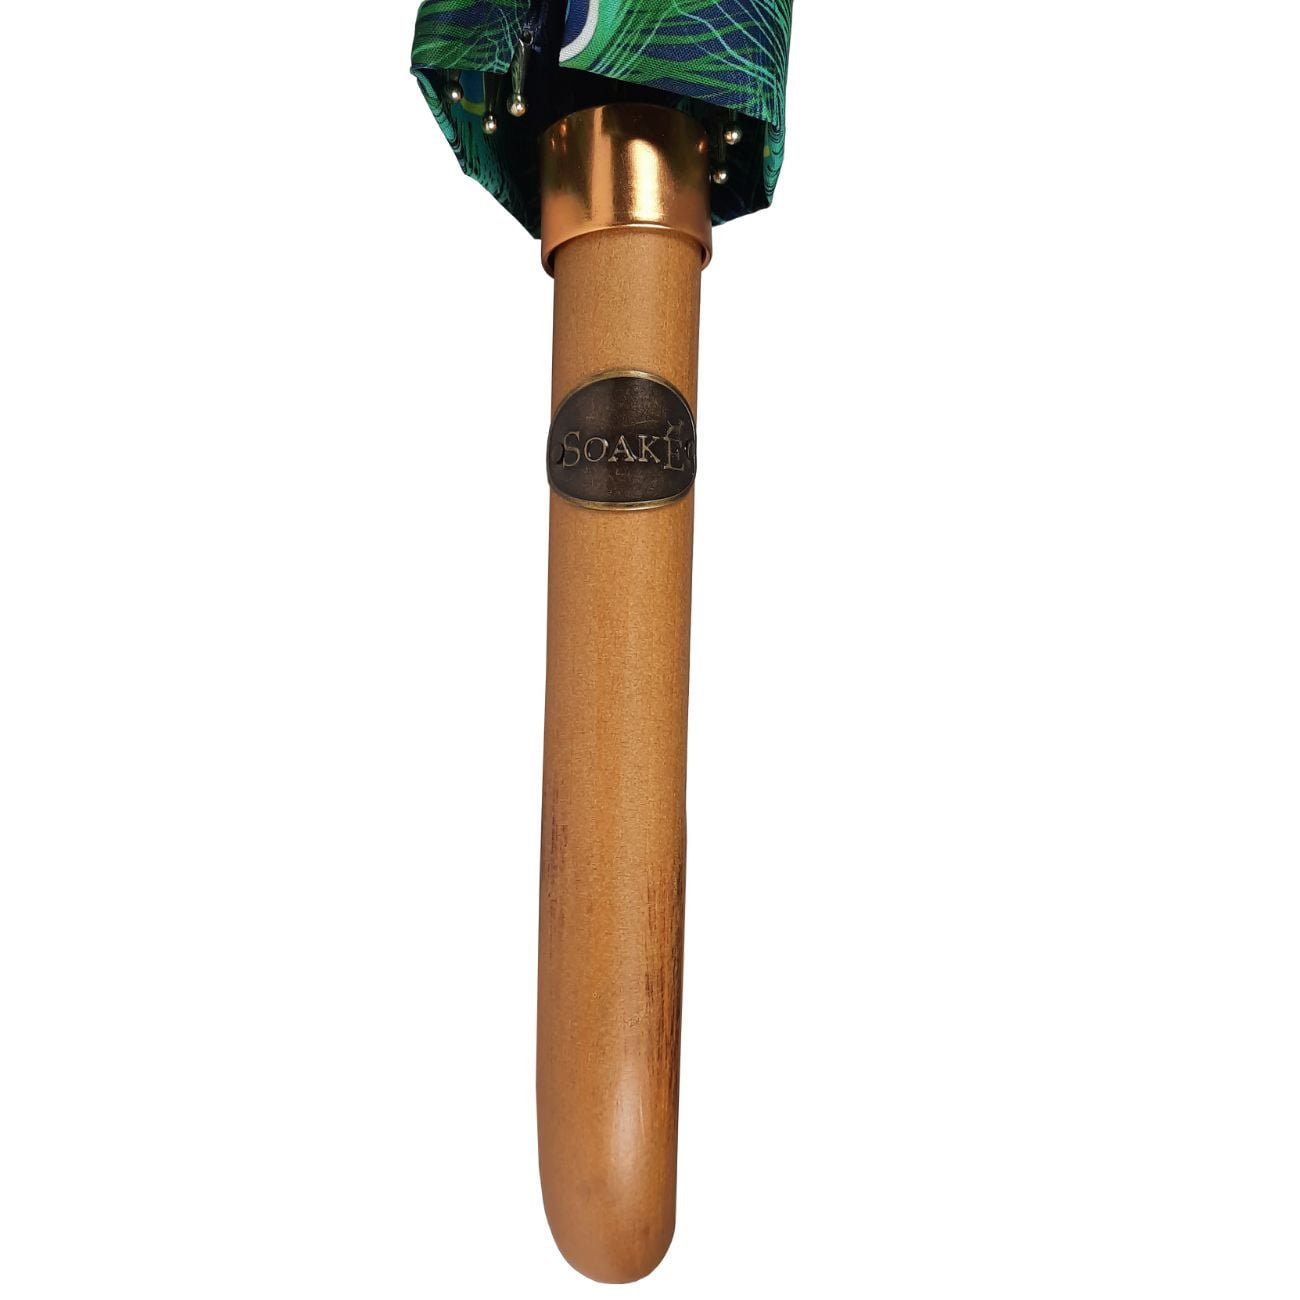 Peacock print umbrella - handle